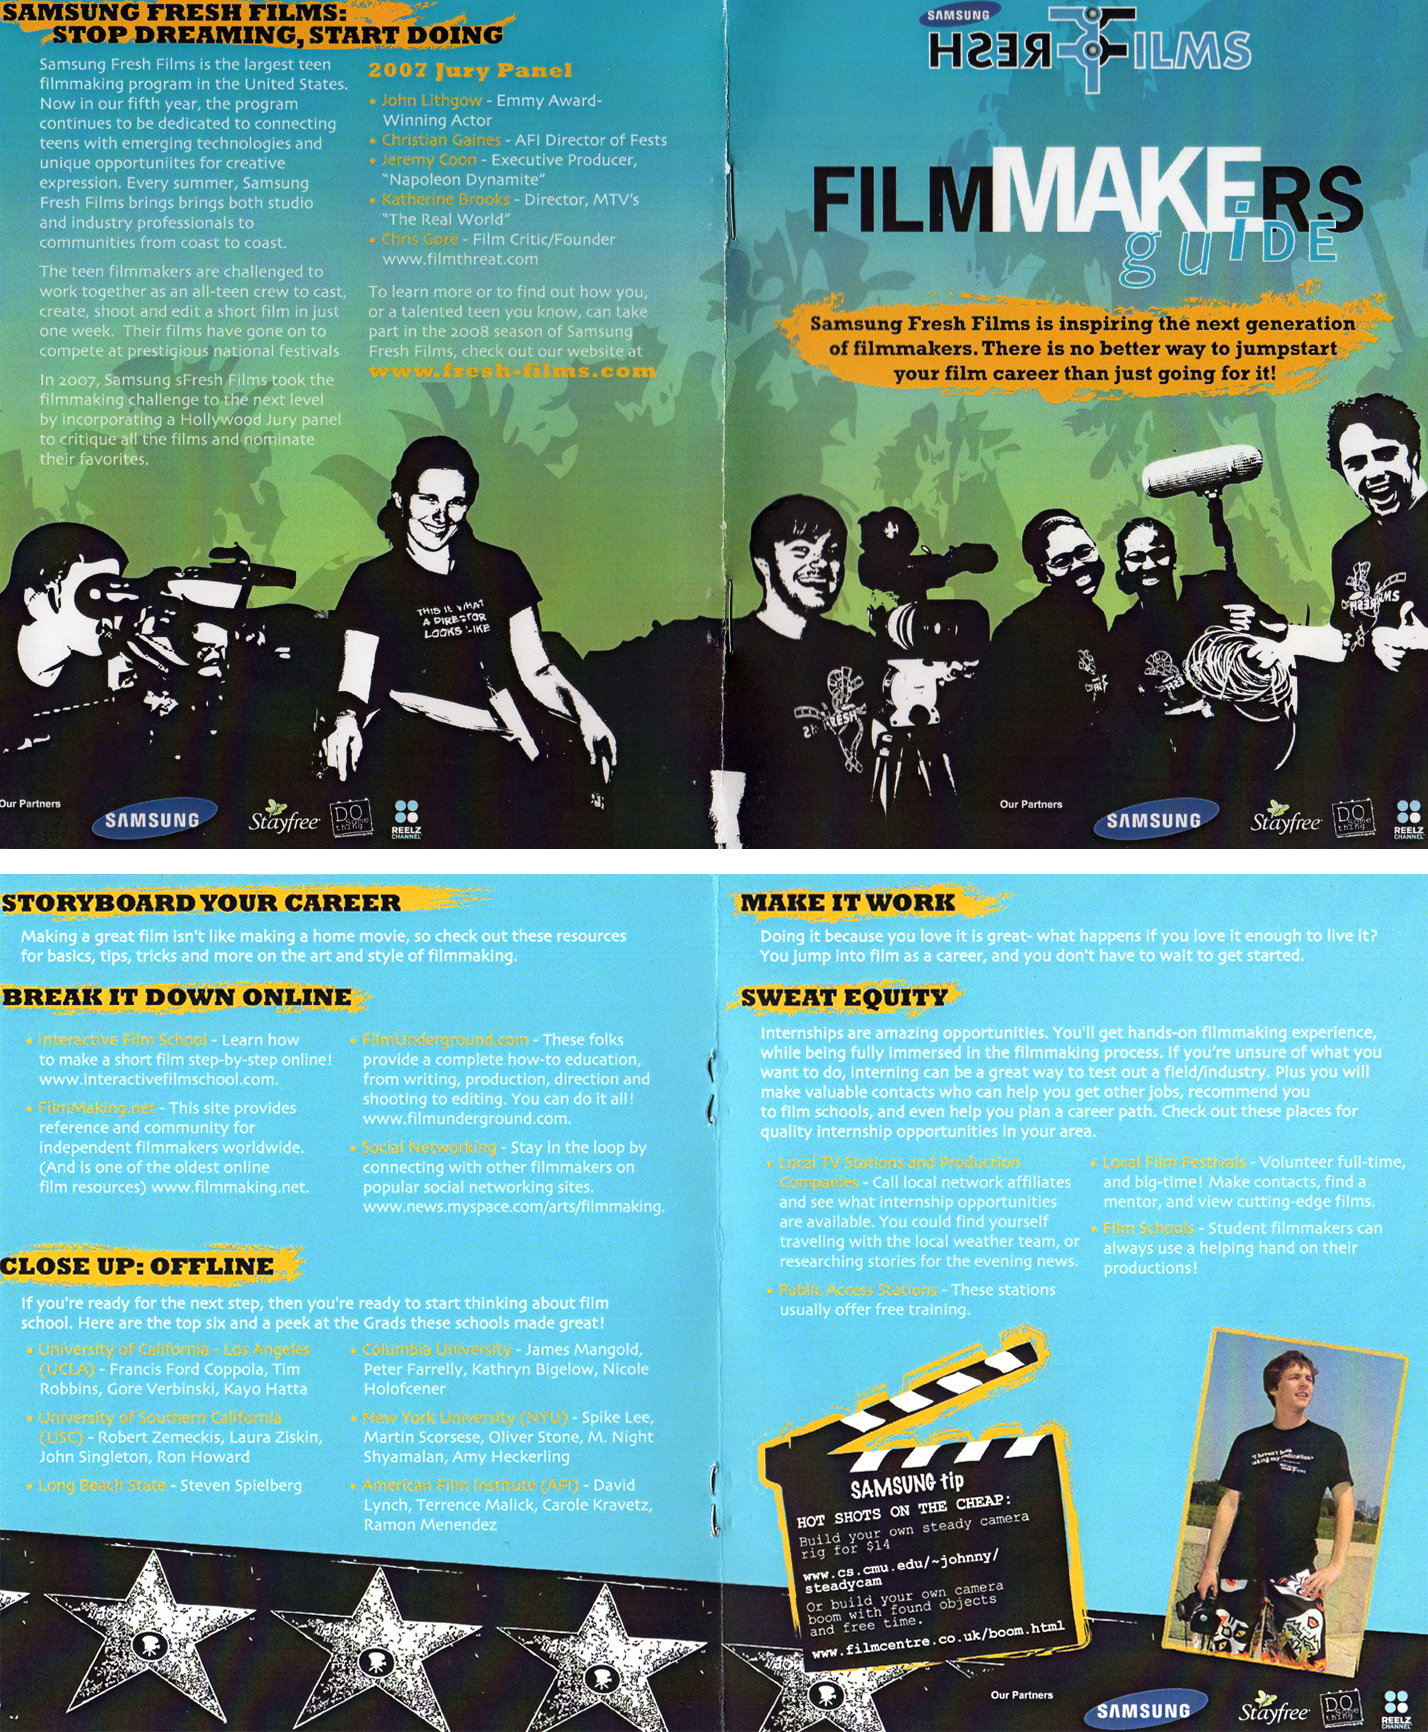 Samsung Filmmaker guide